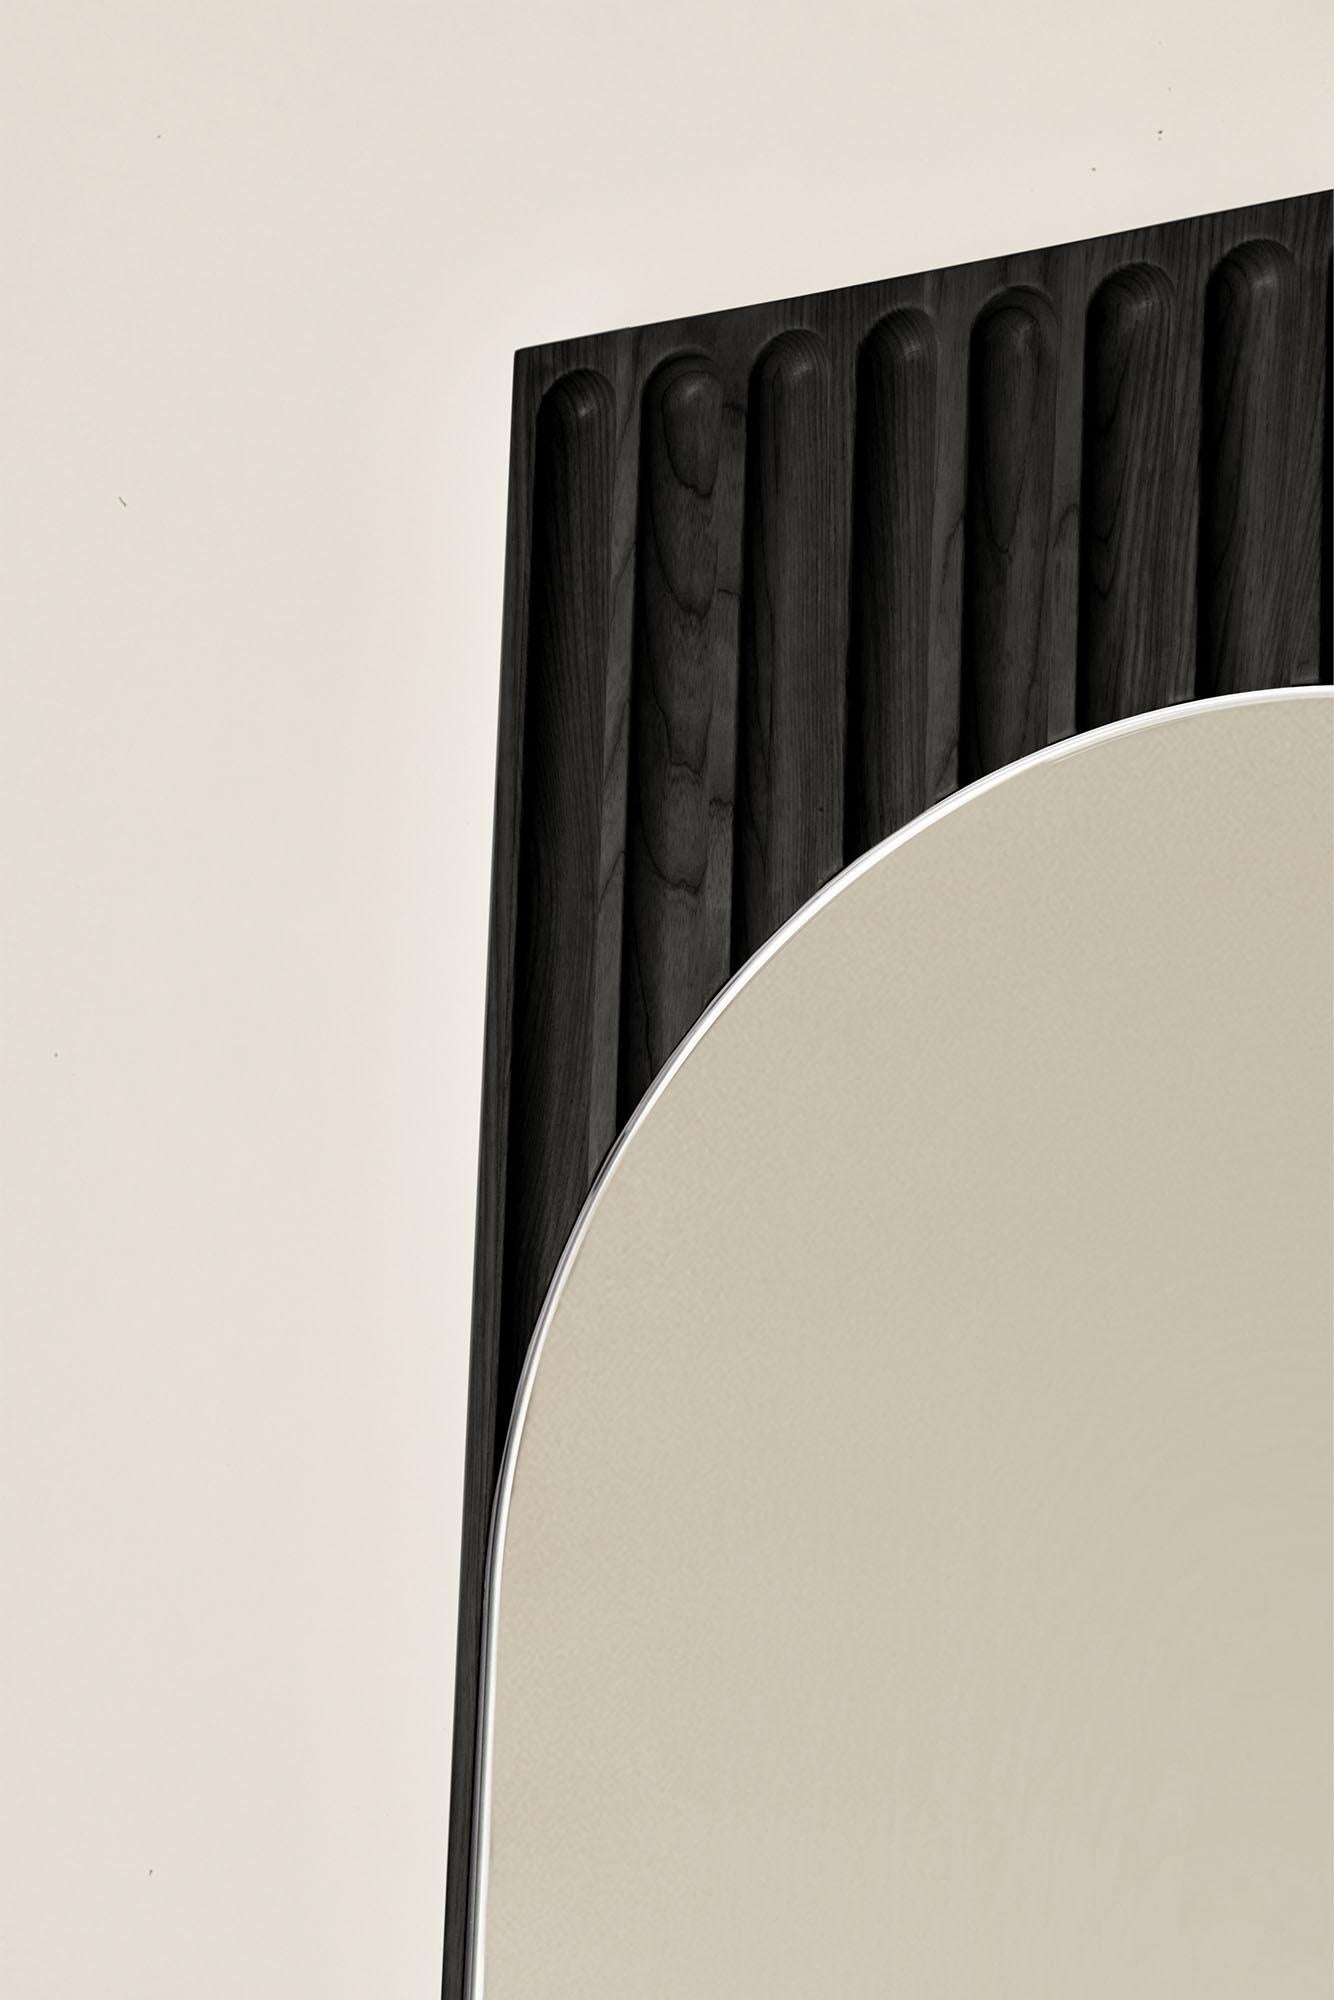 Italian Tutto Sesto Solid Wood Rectangular Mirror, Ash in Black Finish, Contemporary For Sale